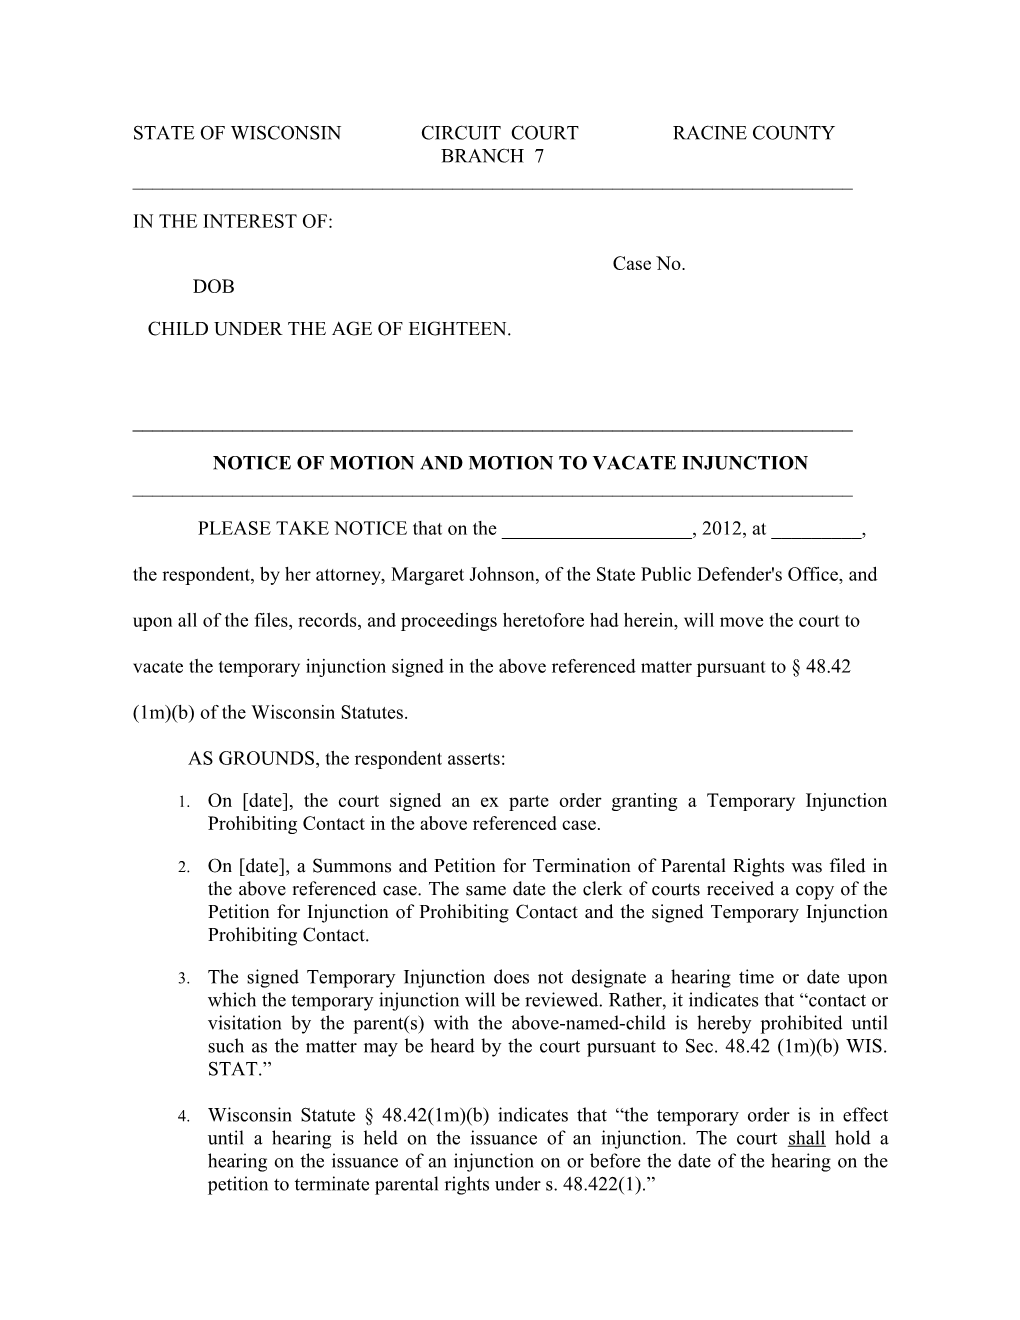 Motion - TPR Injunction - Hayes, Vania